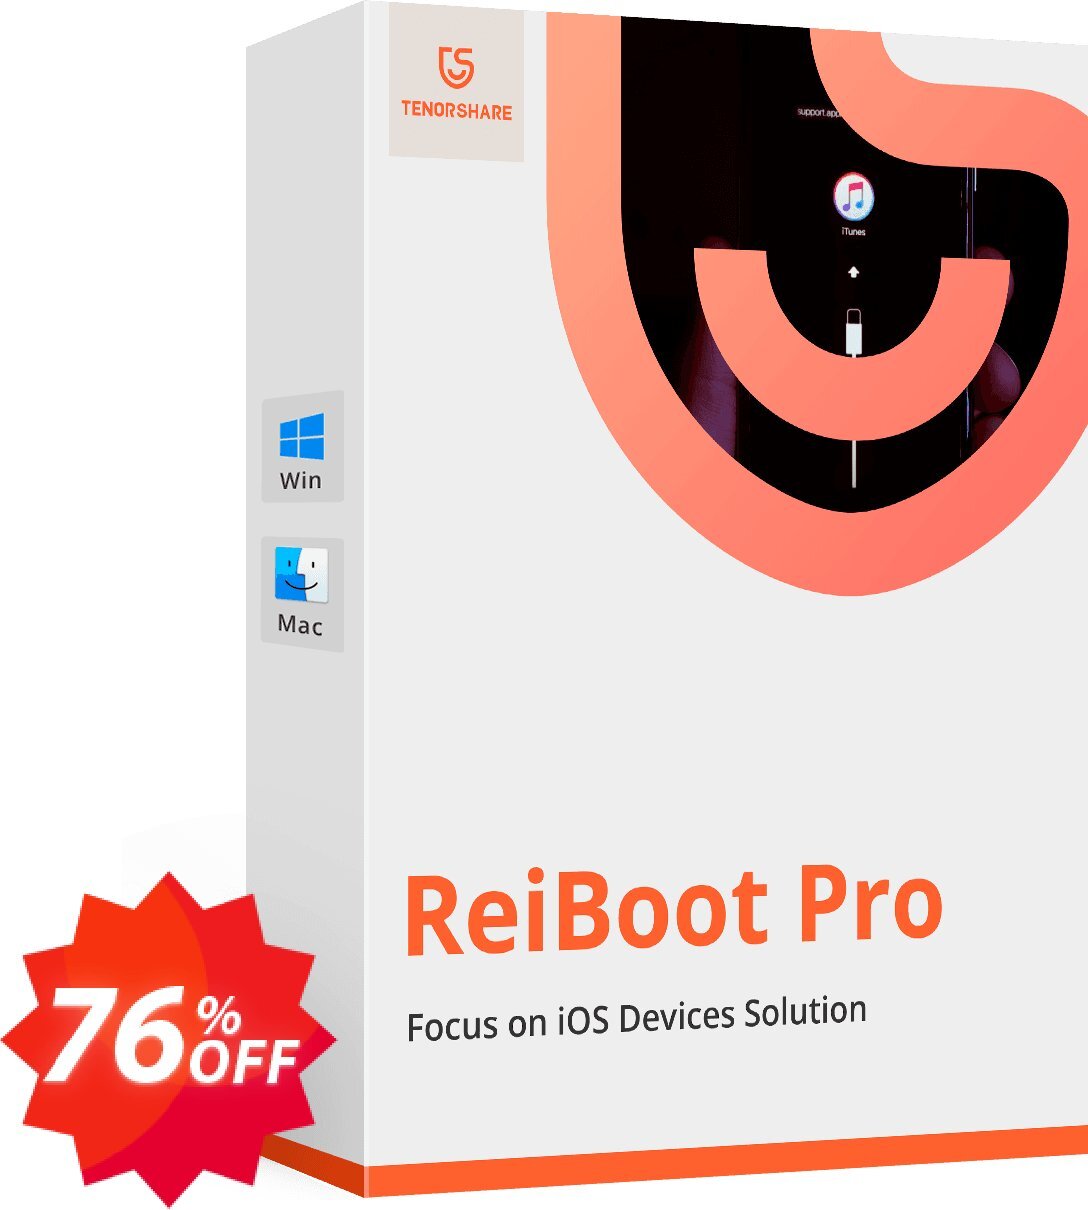 Tenorshare ReiBoot Pro Coupon code 76% discount 